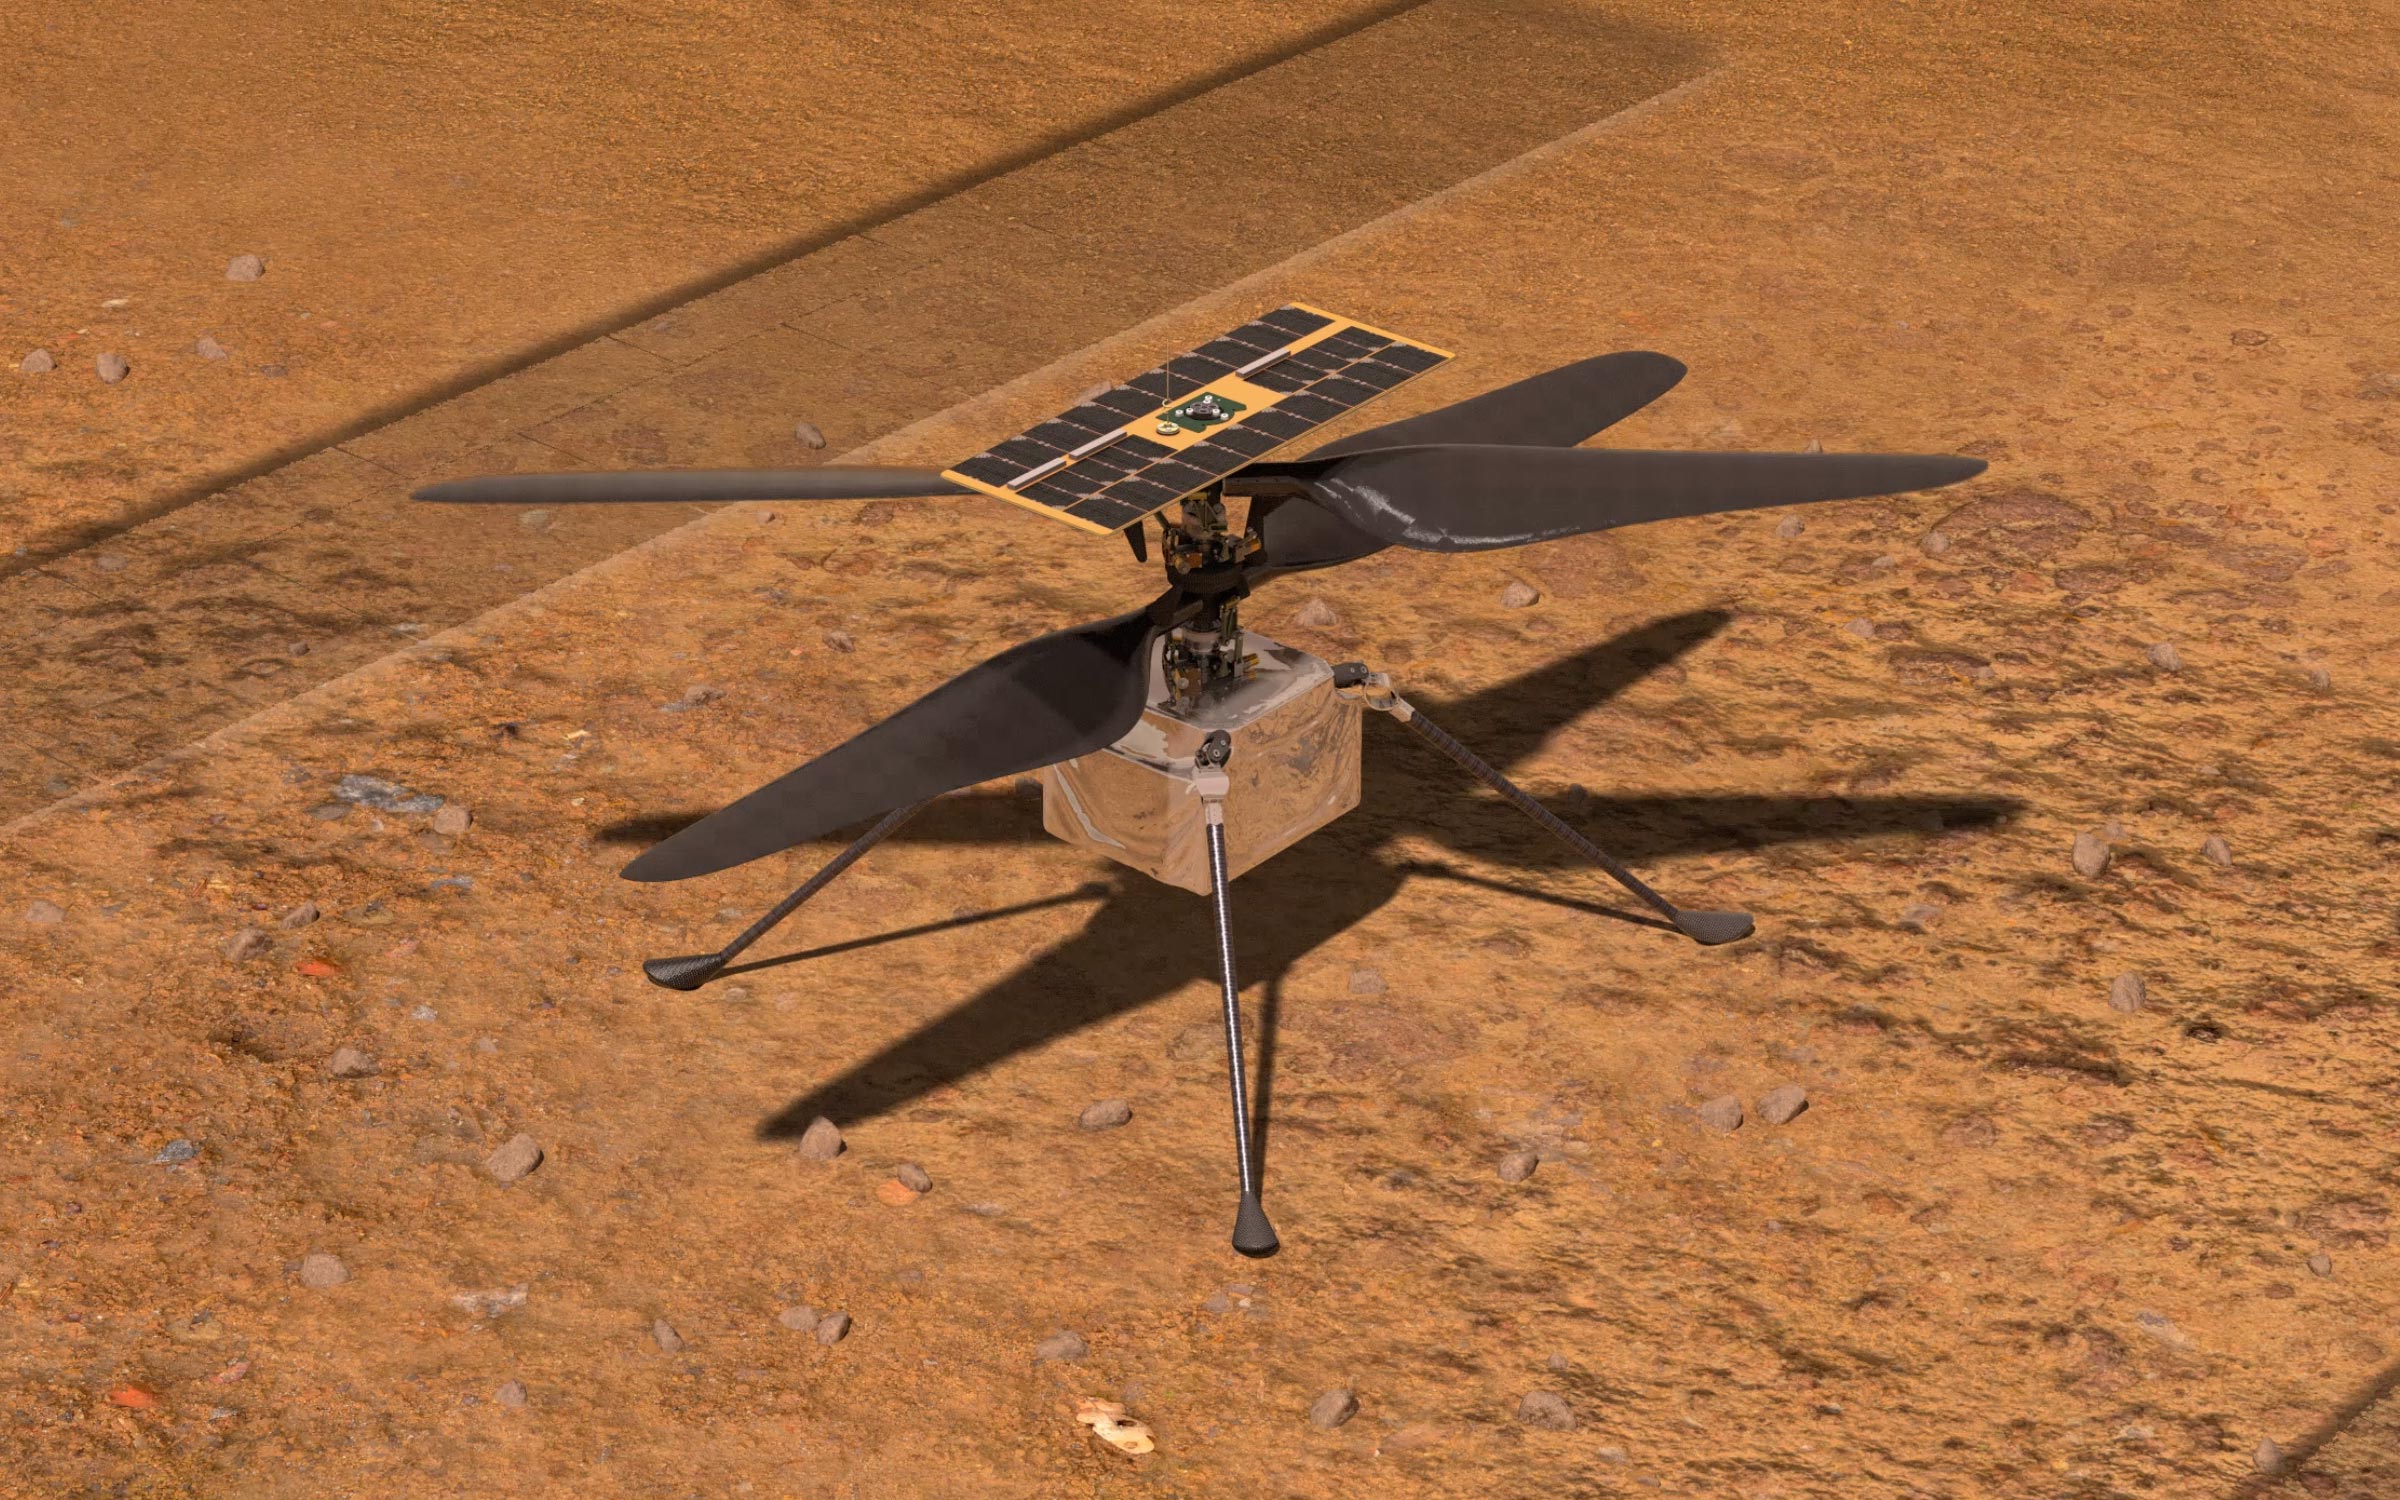 NASA’s innovative Mars Helicopter finally calls home